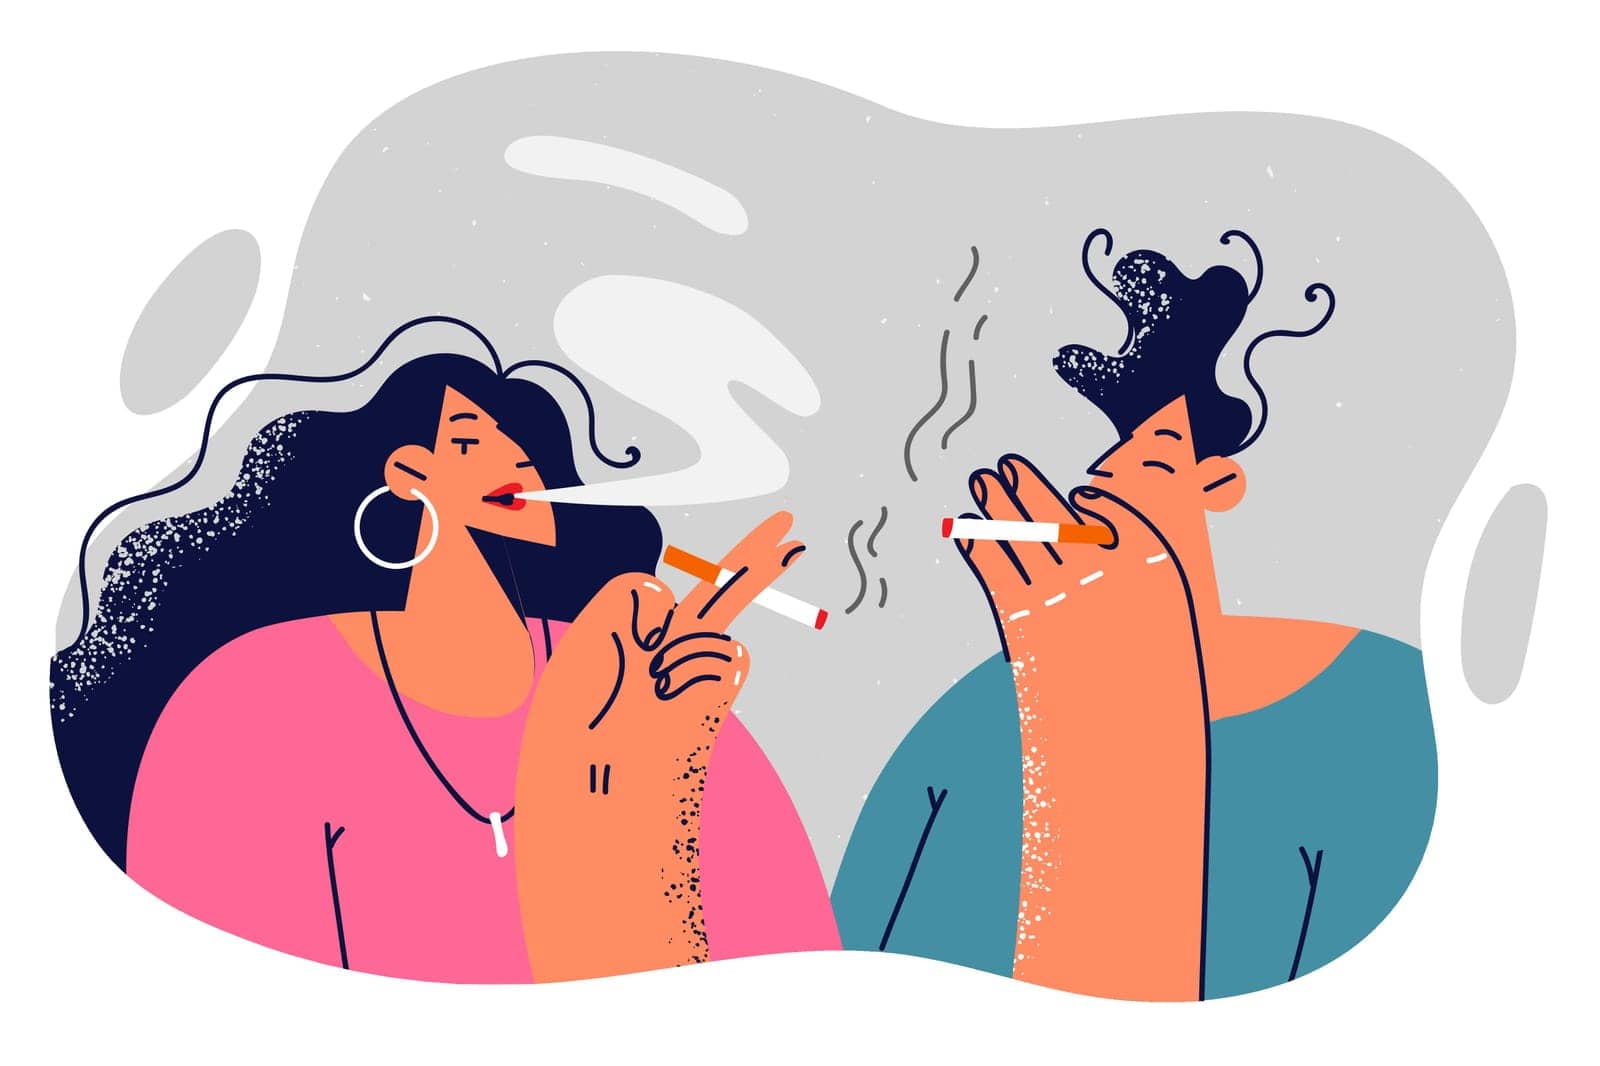 Man and woman smoking cigarettes enjoying tobacco smoke and gossiping during work break by Vasilyeu